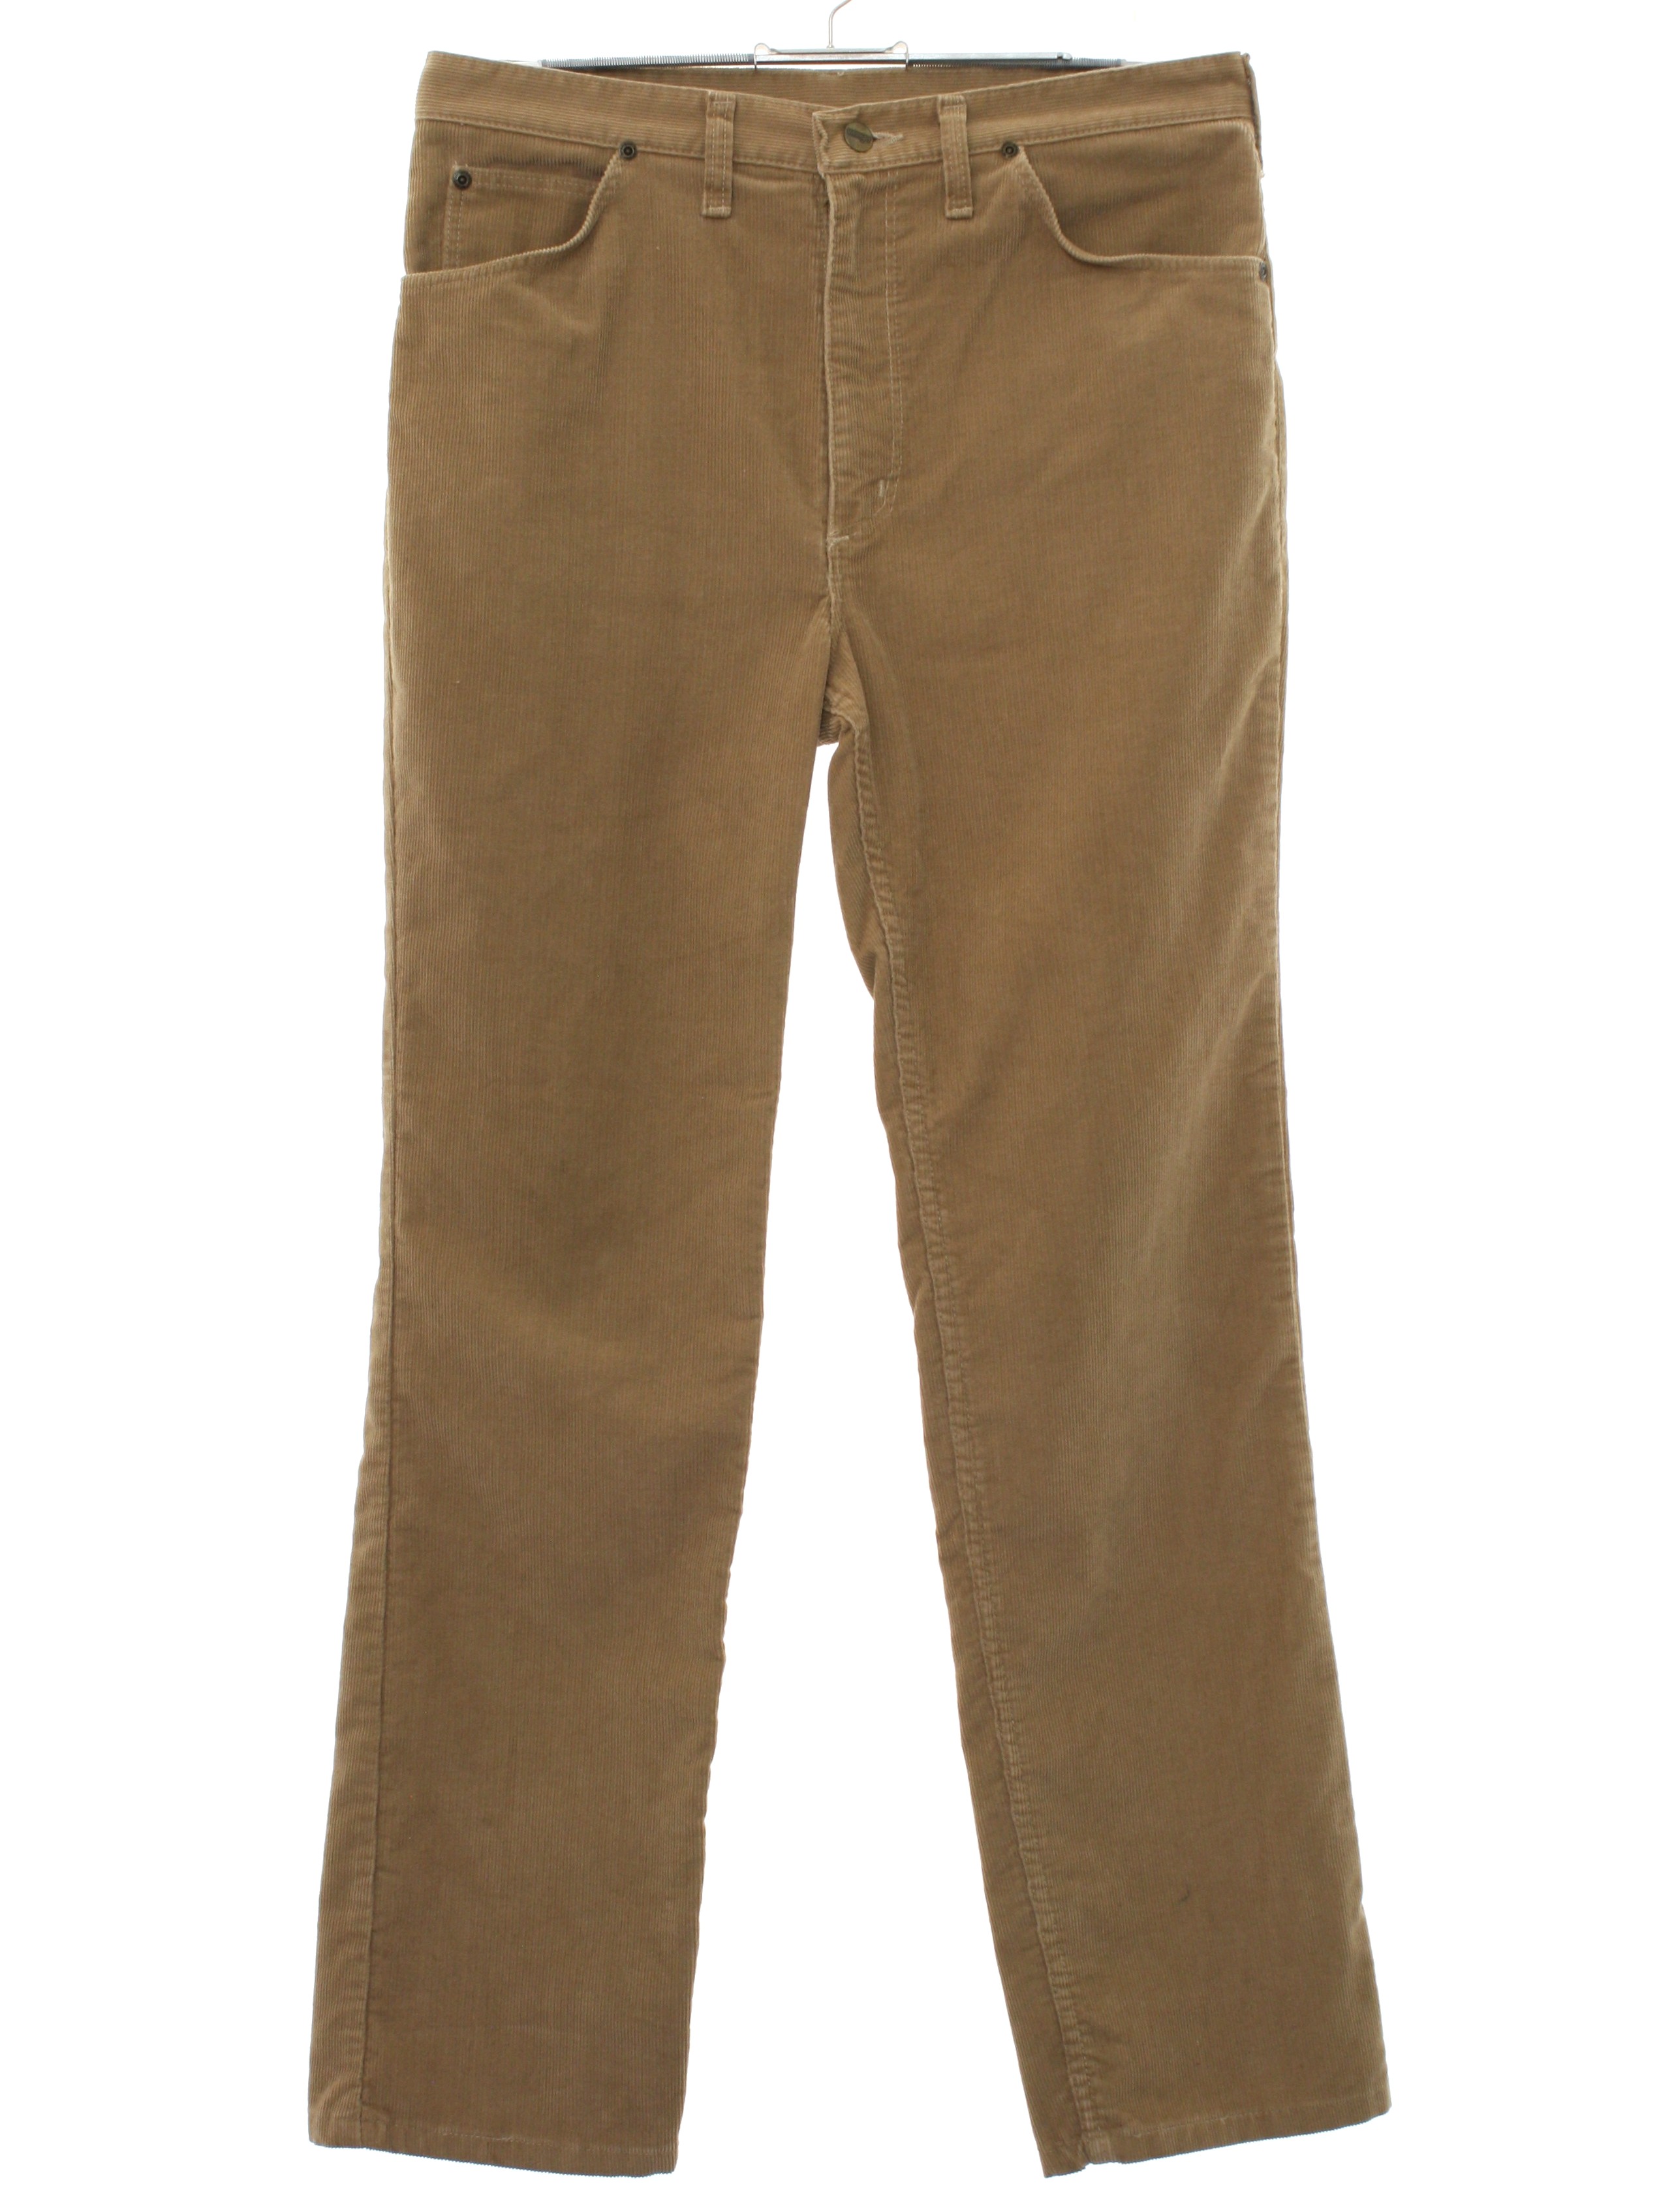 80s Retro Pants: 80s -Wrangler- Mens tan cotton corduroy flat front ...